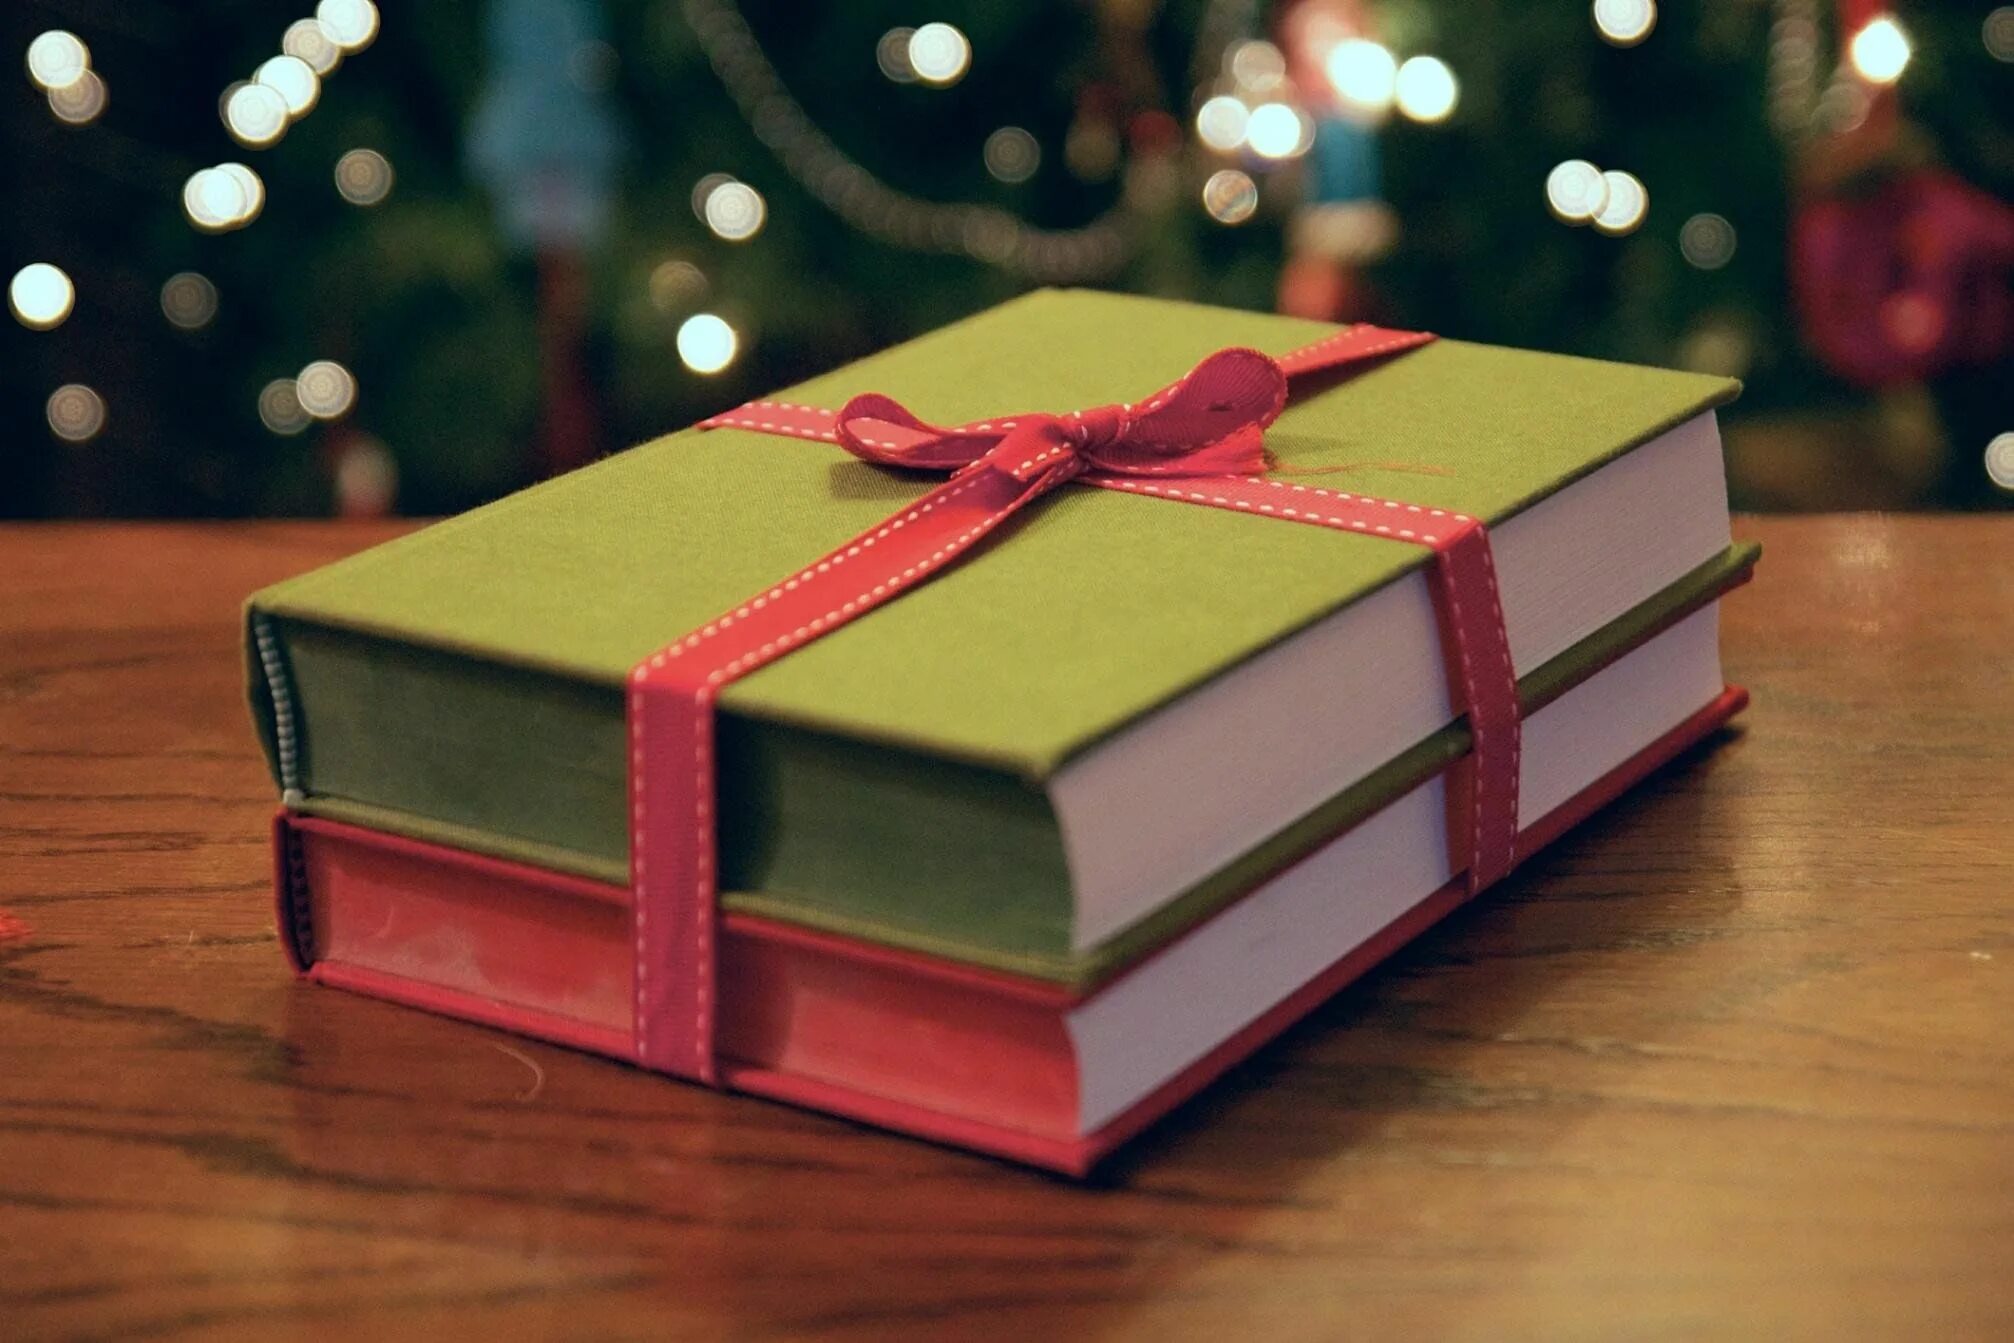 Meet new books. Книга в подарок. Полдарк книга. Под книгой. Книга в подарок на новый год.